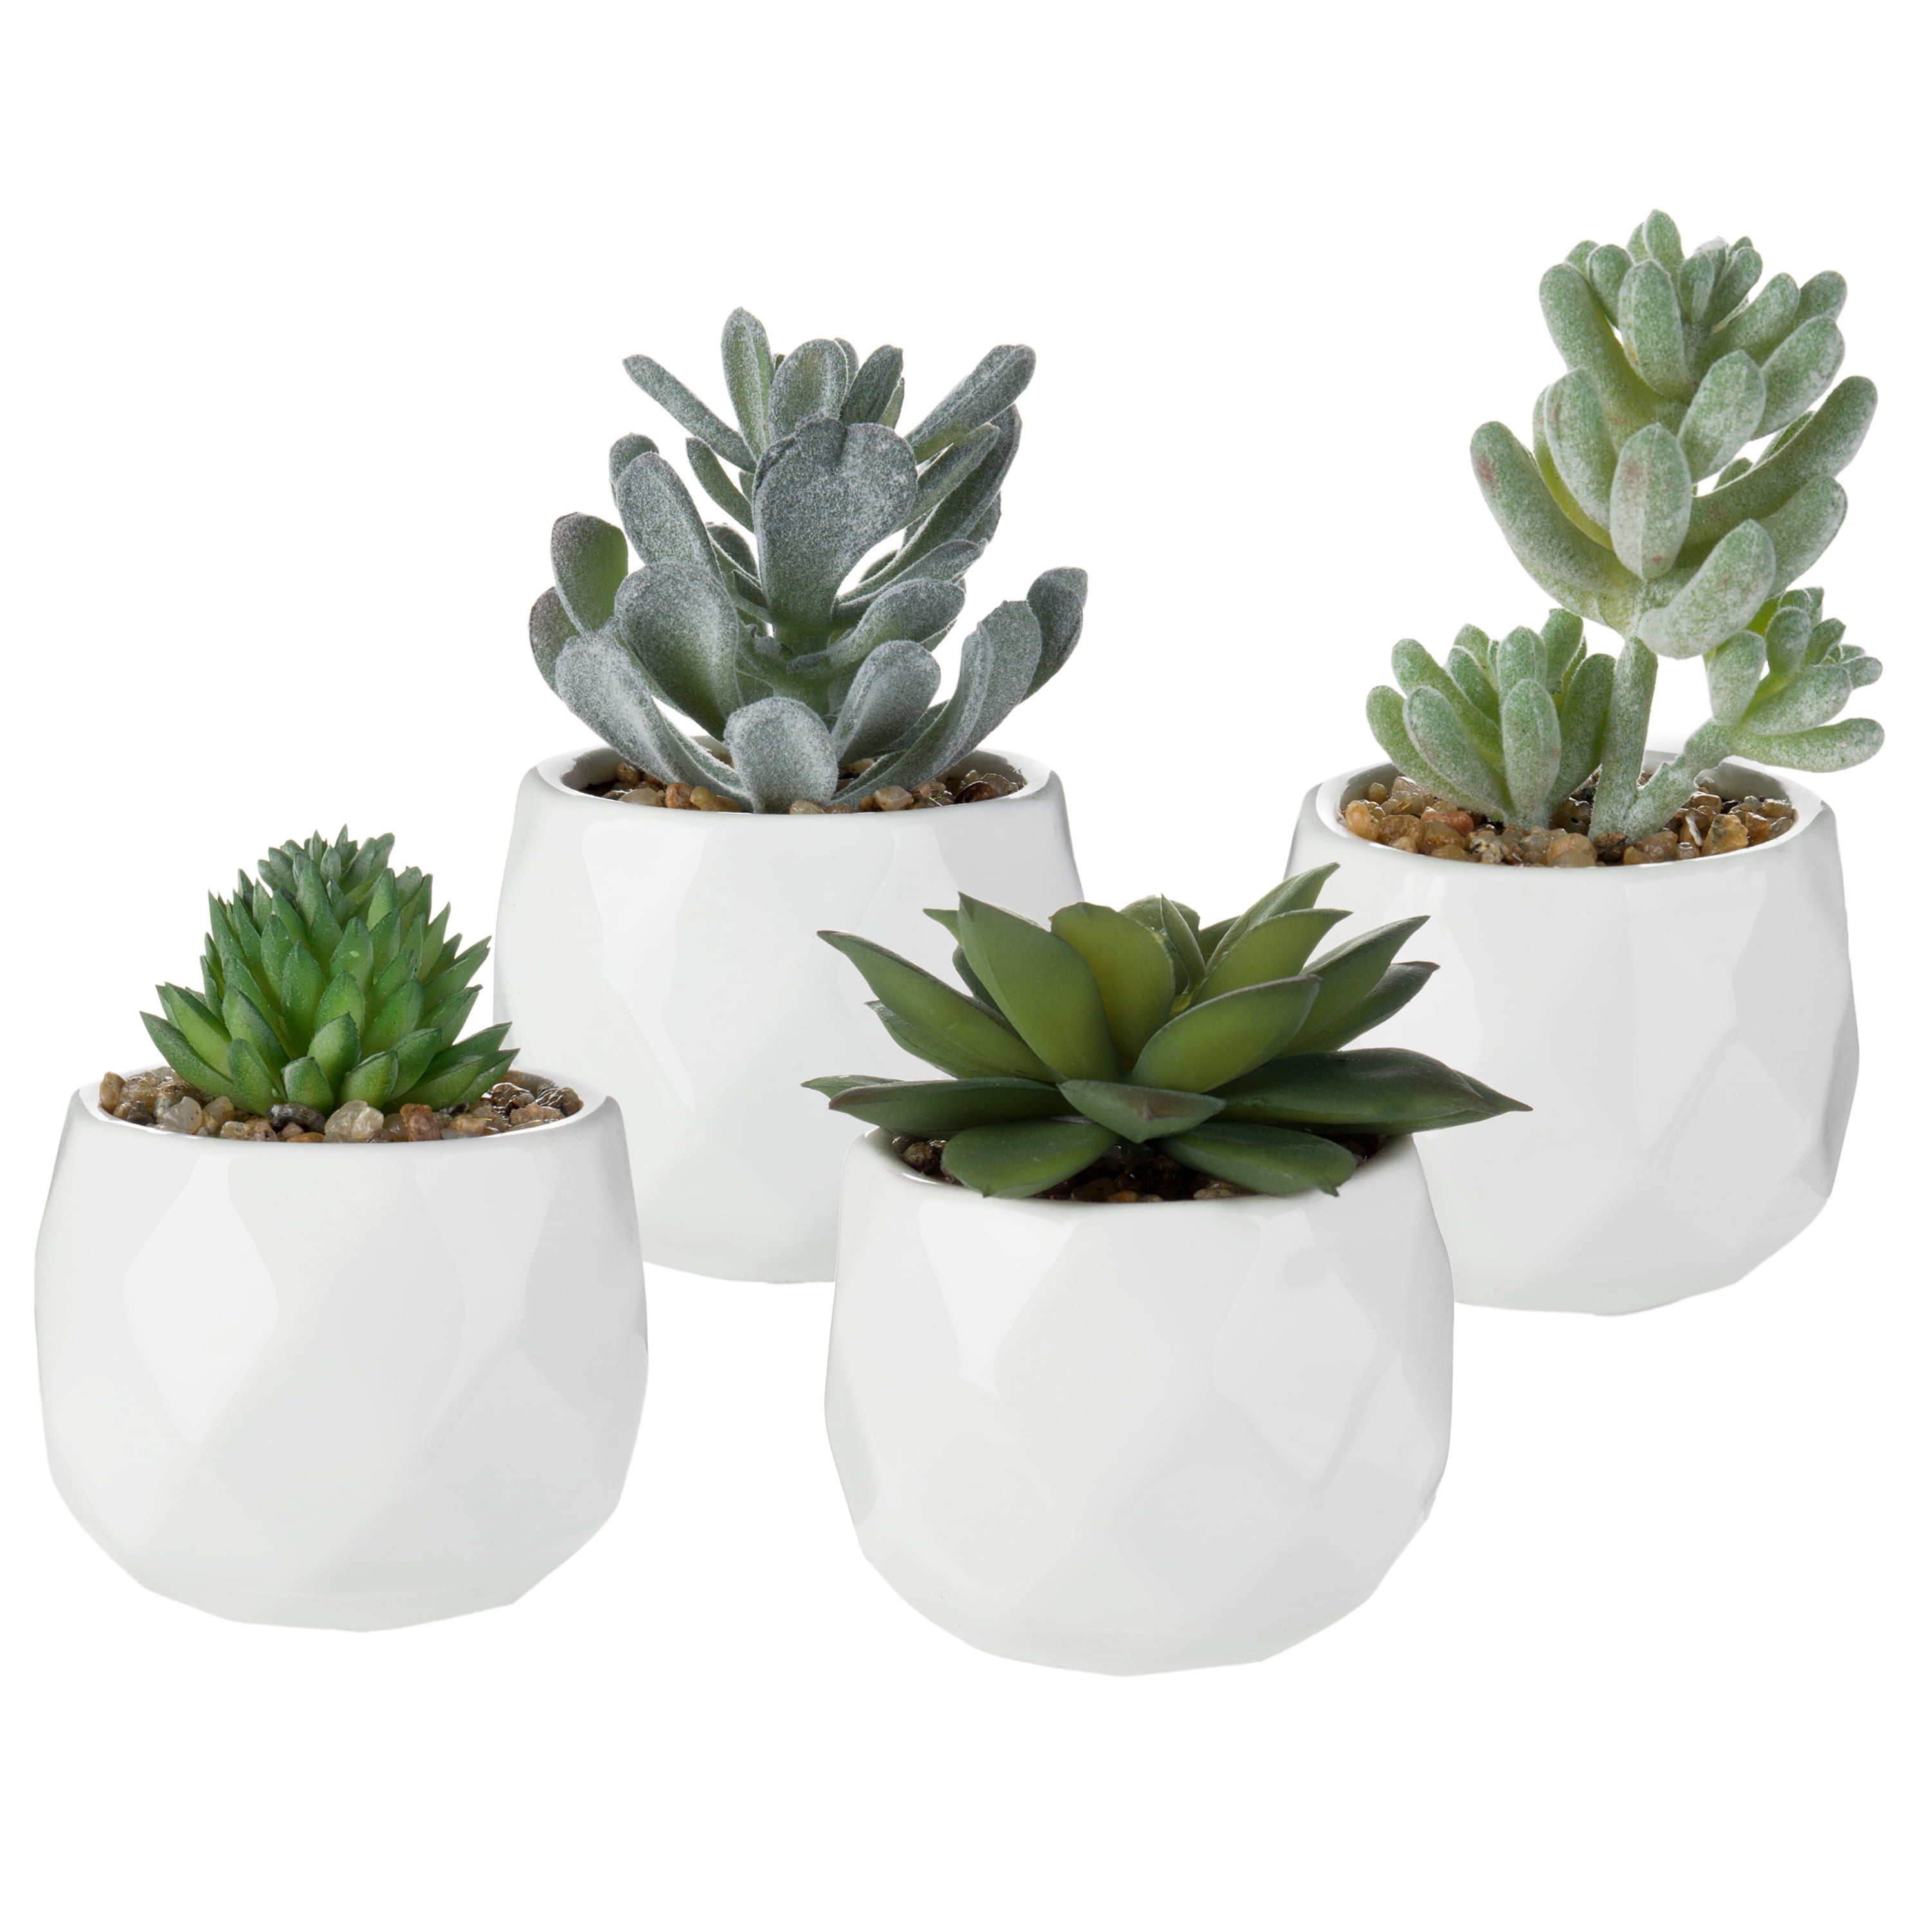 MyGift Assorted Realistic Succulent Plants in Modern Geometric Ceramic Pots Set of 4 